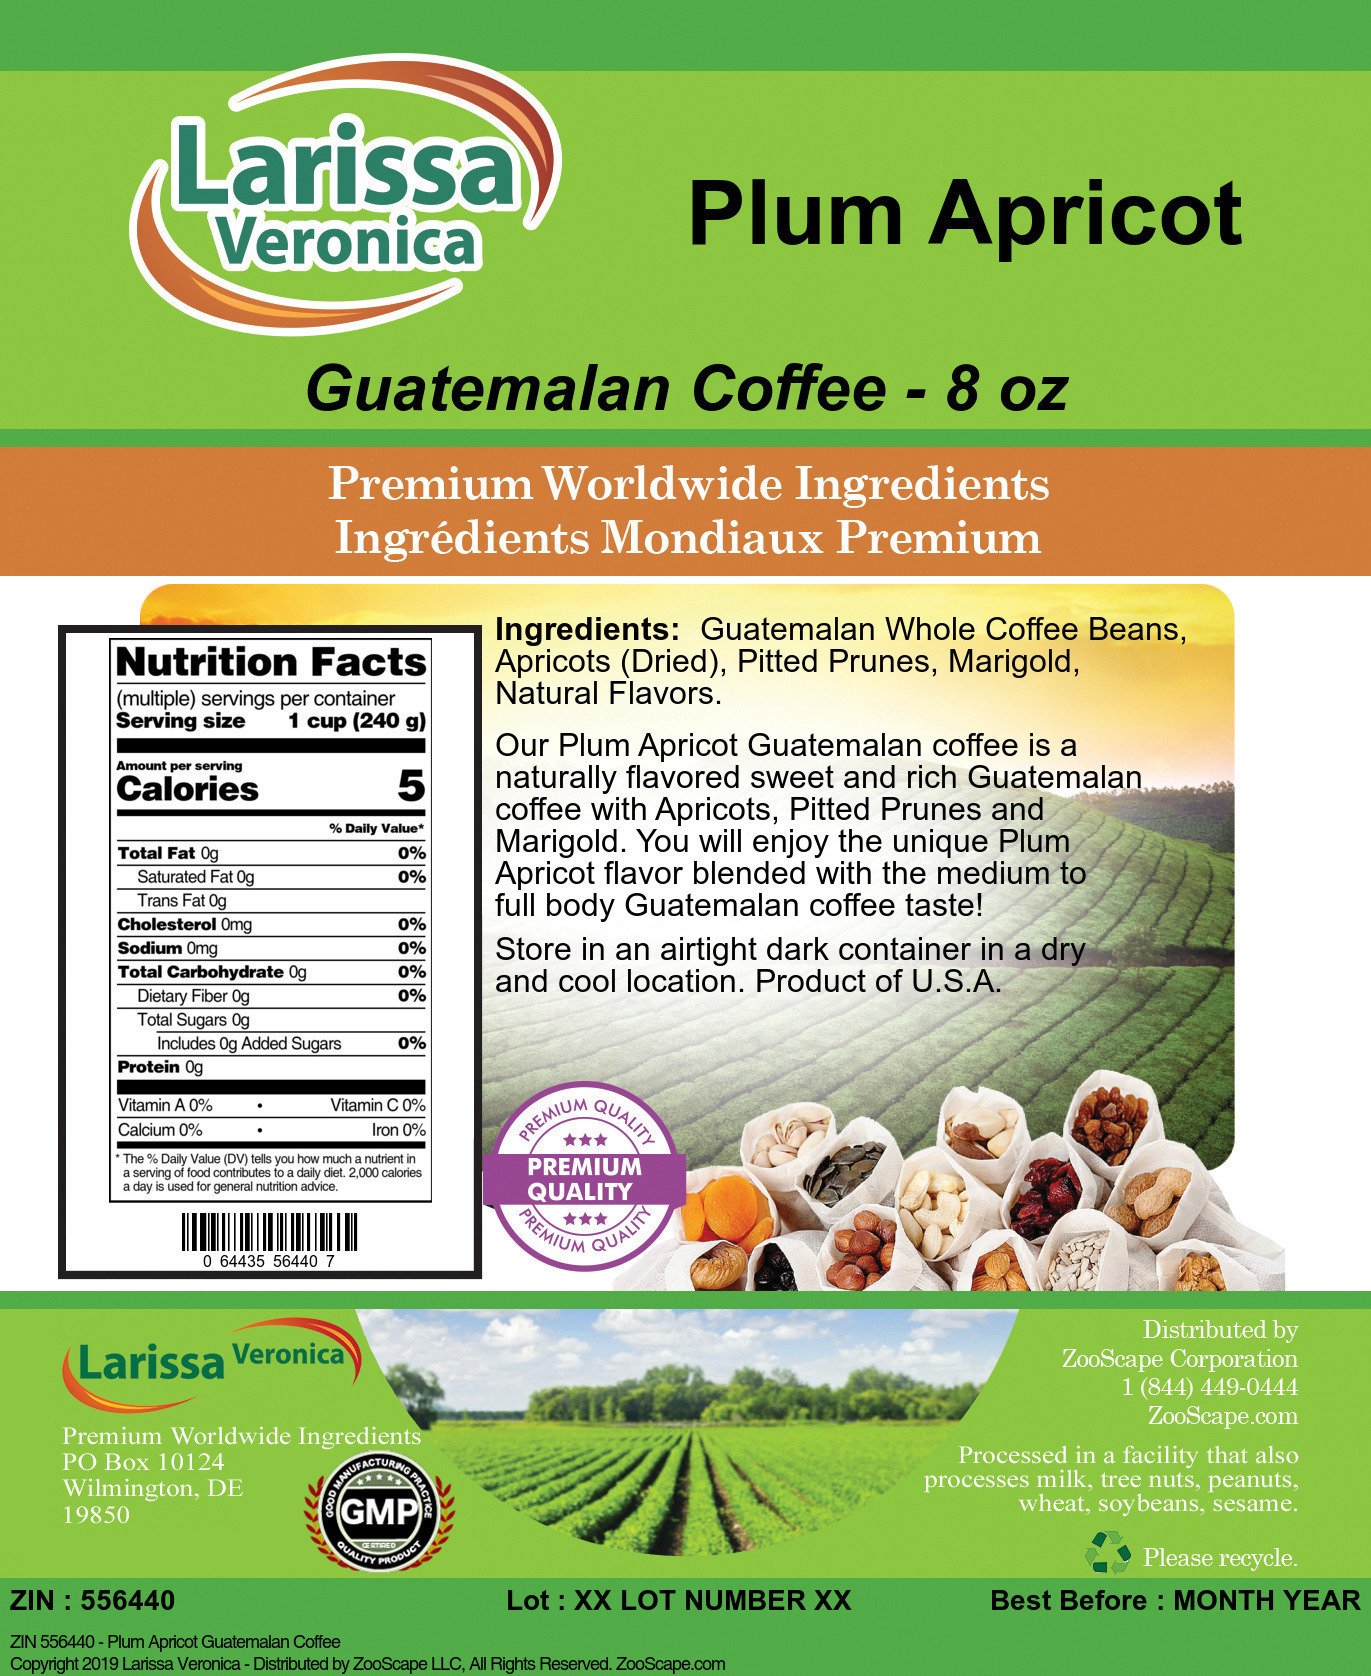 Plum Apricot Guatemalan Coffee - Label